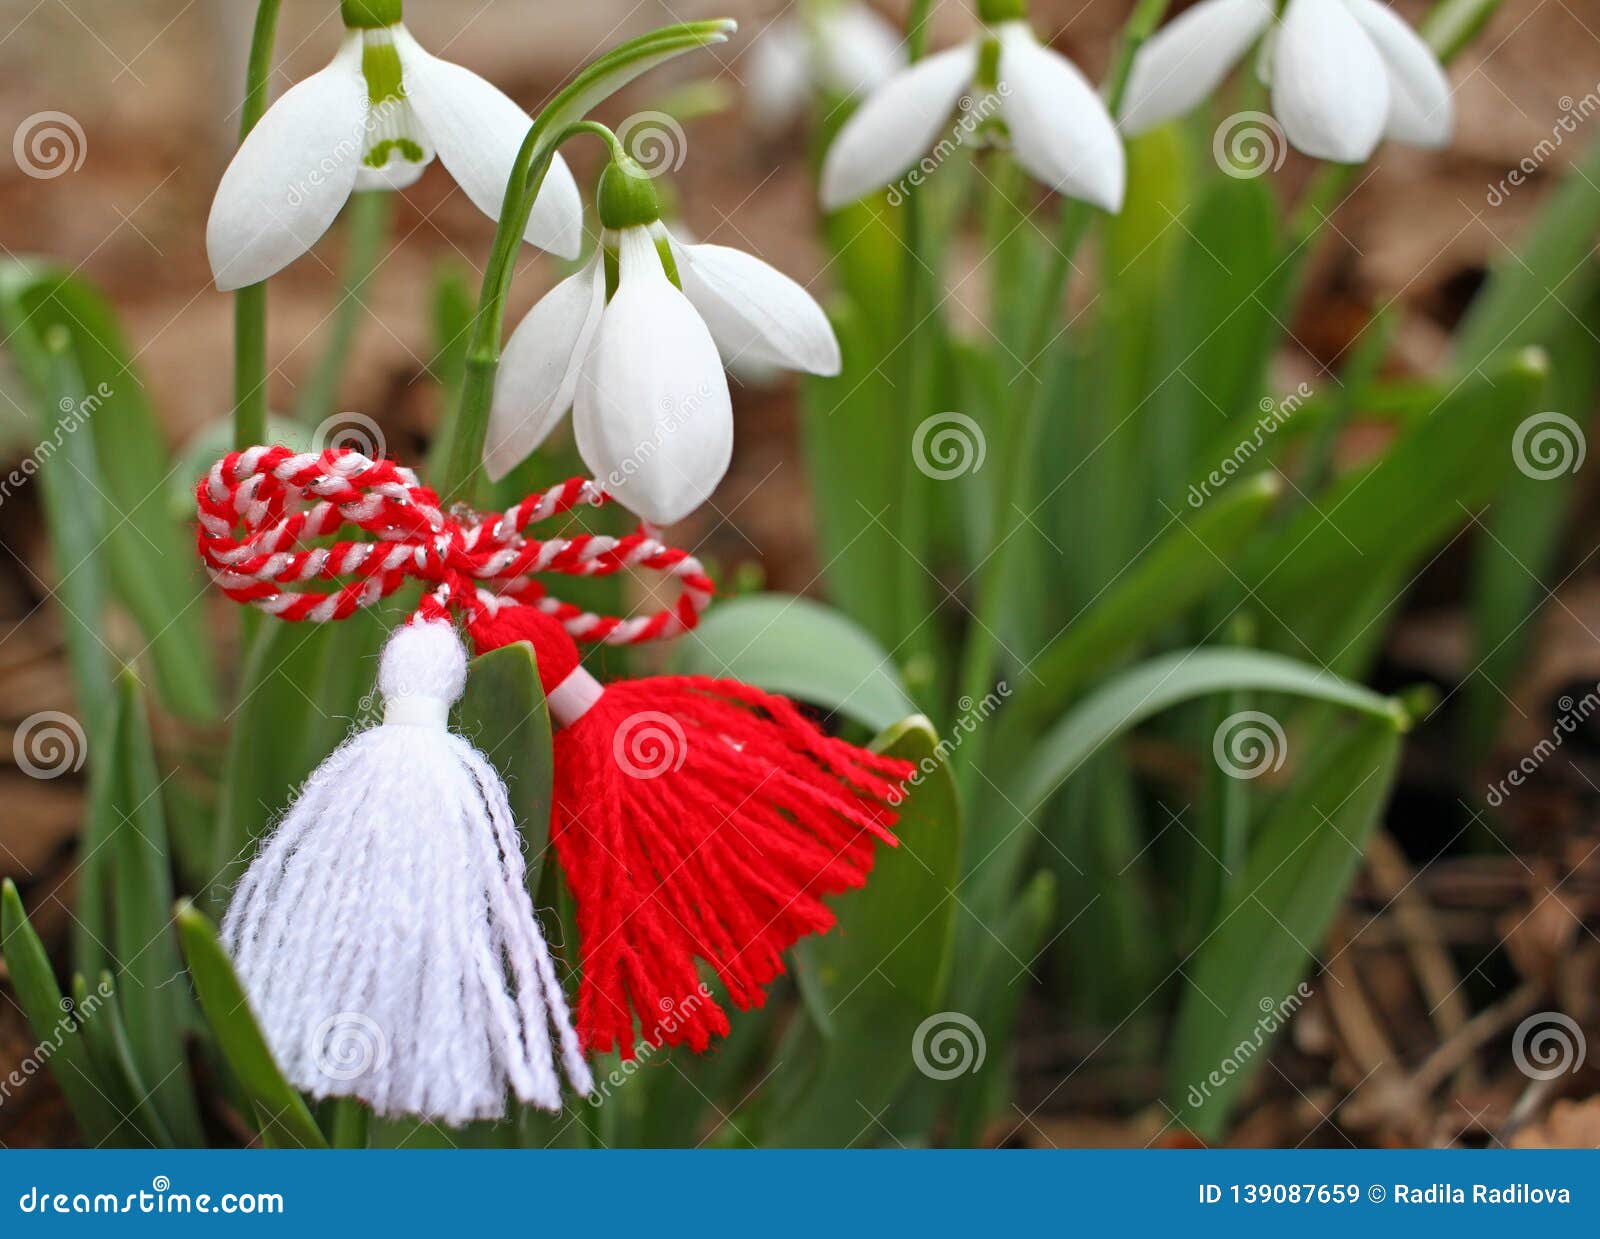 snowdrop spring flowers with martenitsa. baba marta day